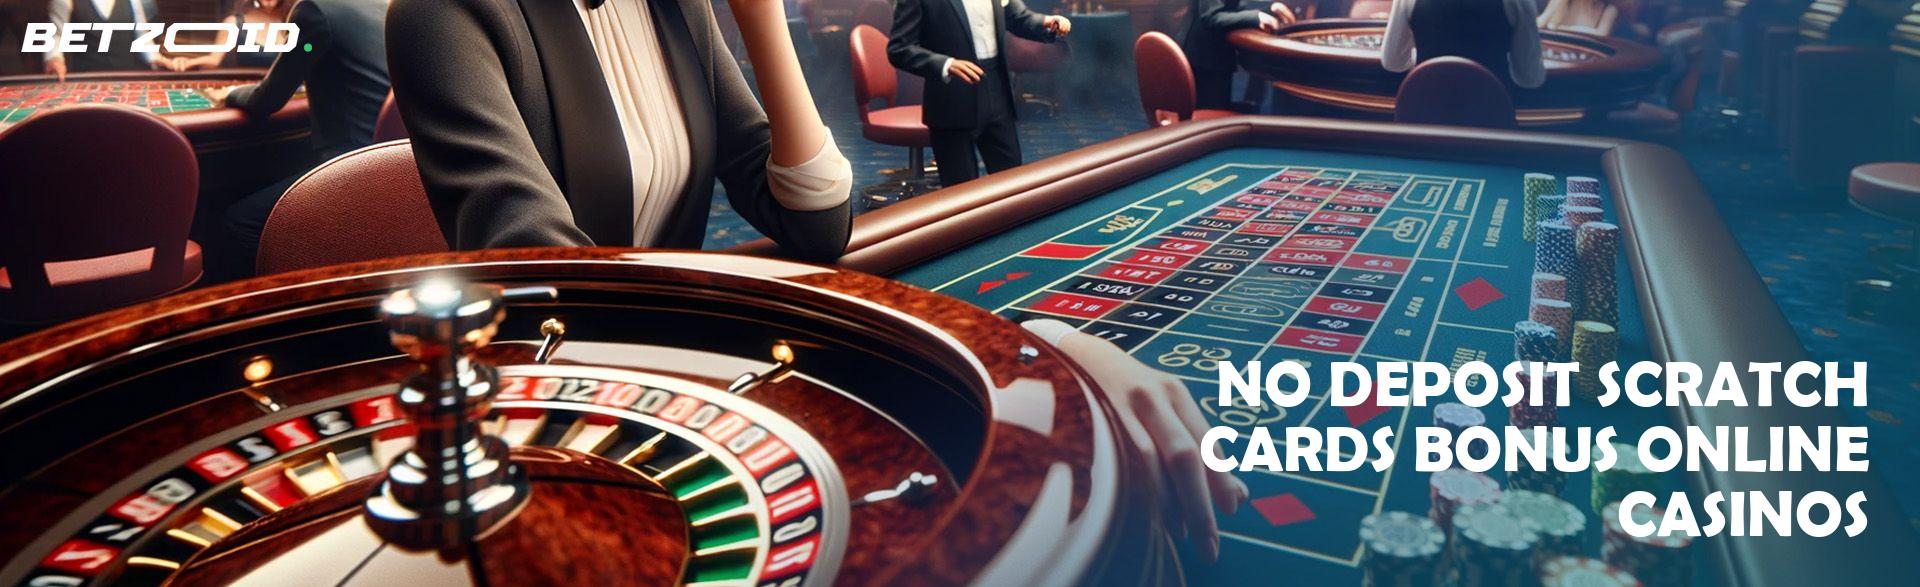 No Deposit Scratch Cards Bonus Online Casinos.